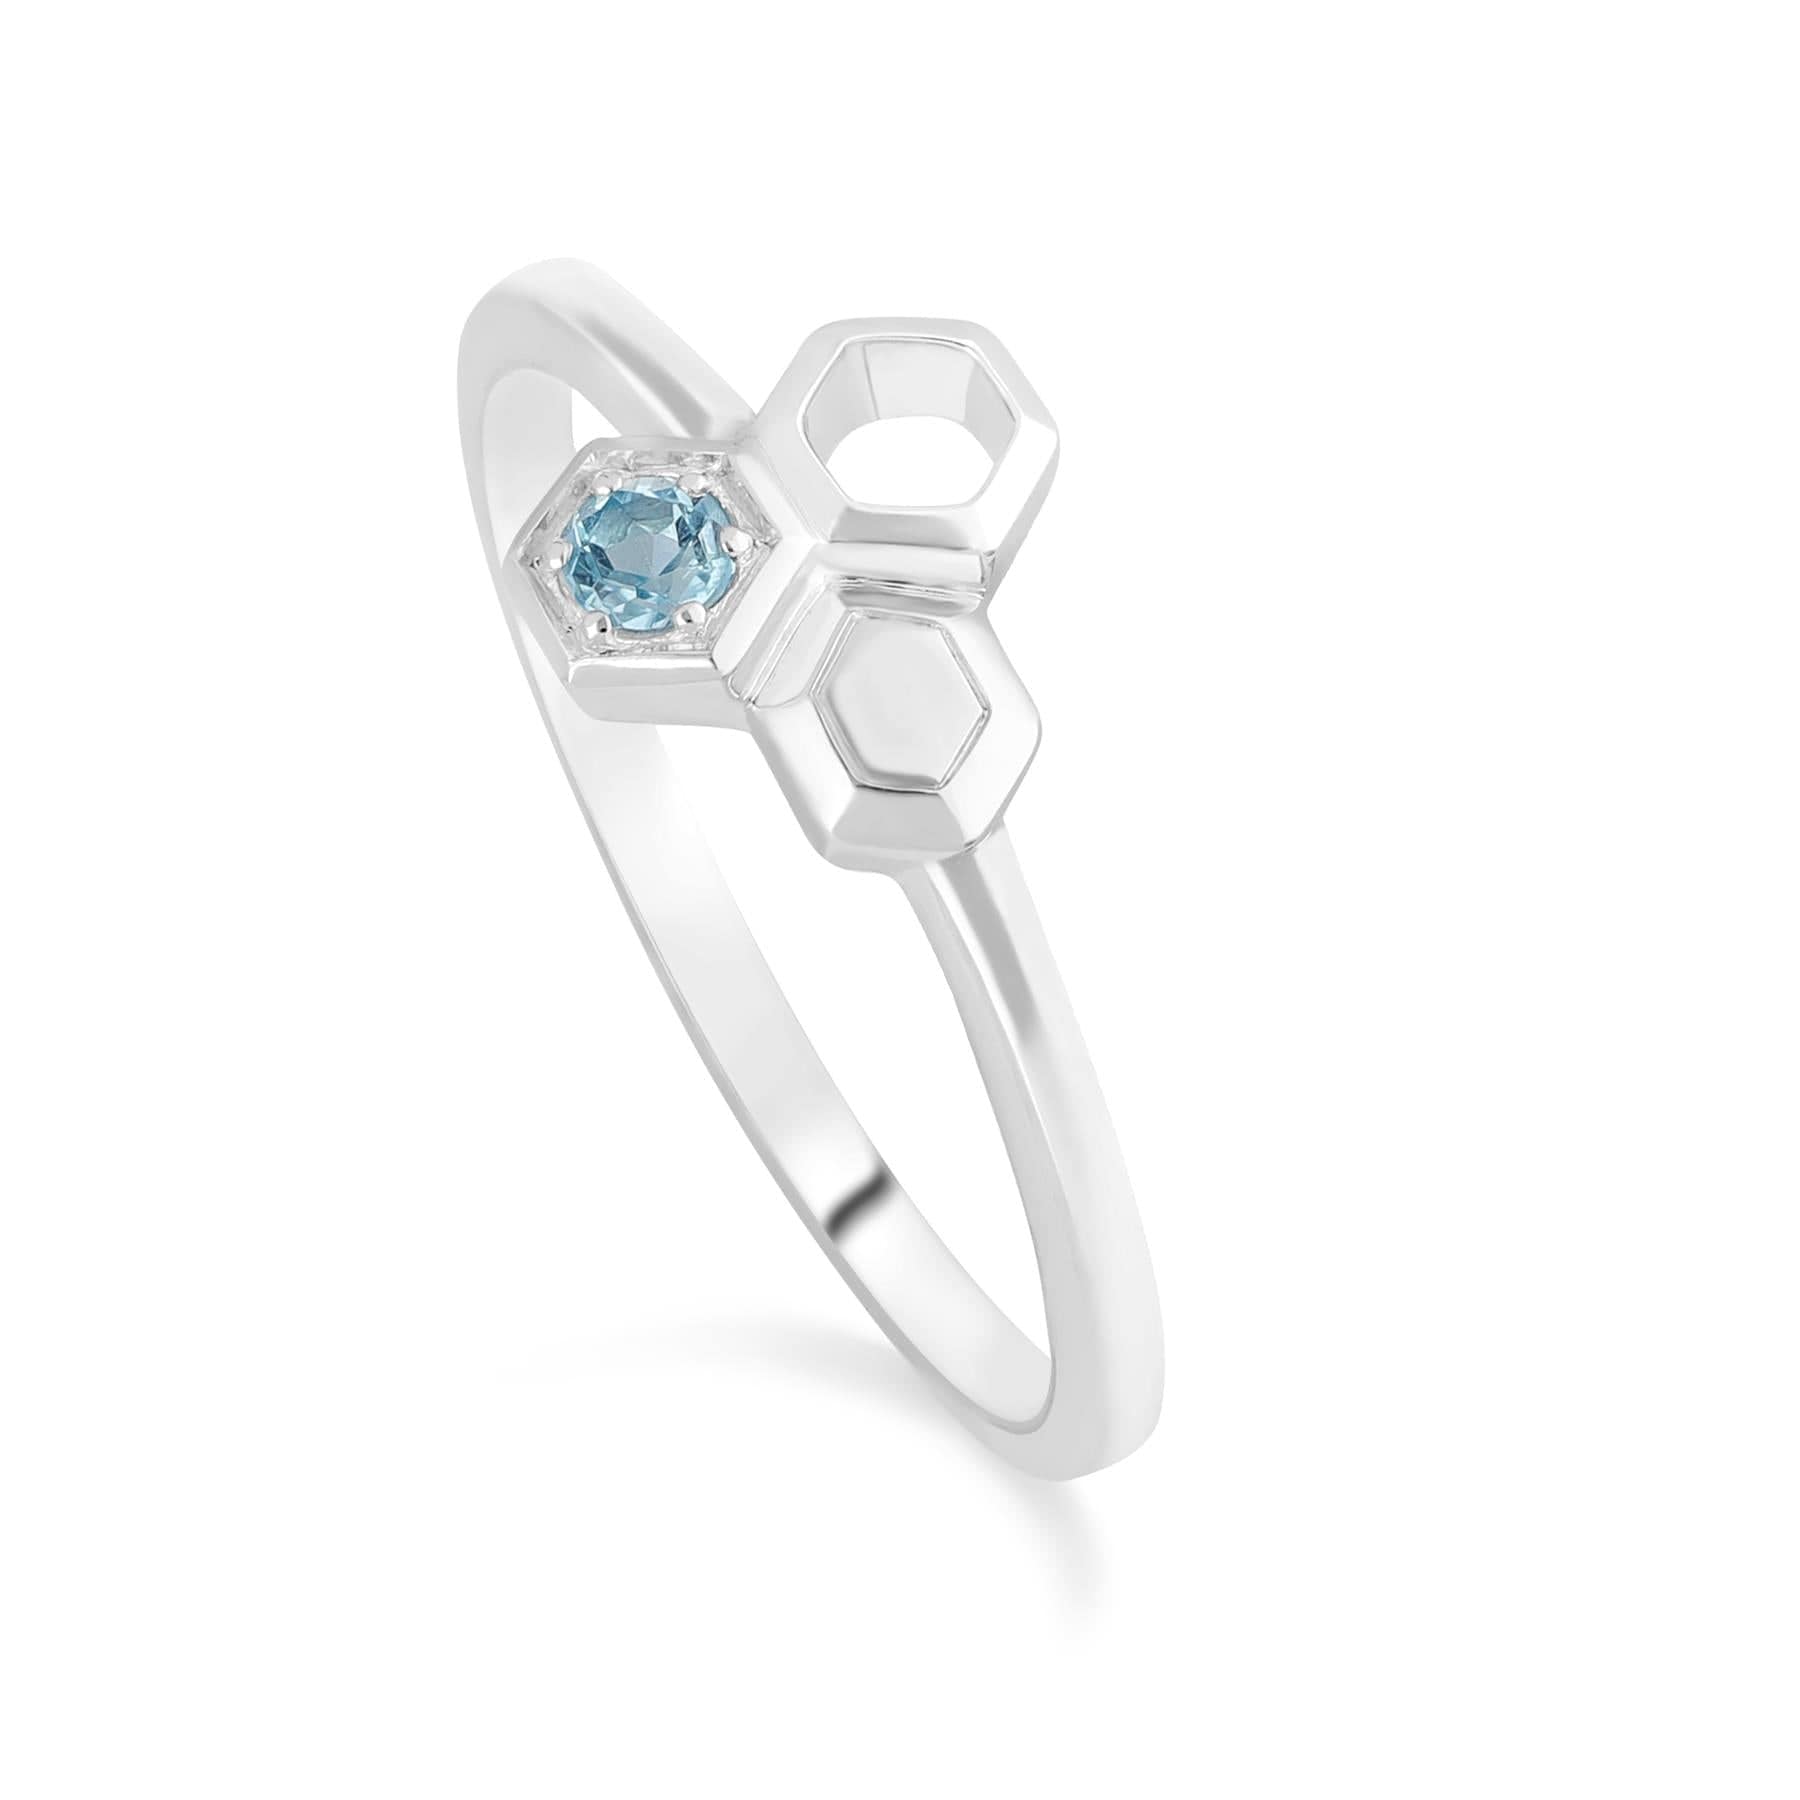 270R057201925 Gemondo Honeycomb Inspired Blue Topaz Ring in 925 Sterling Silver 1